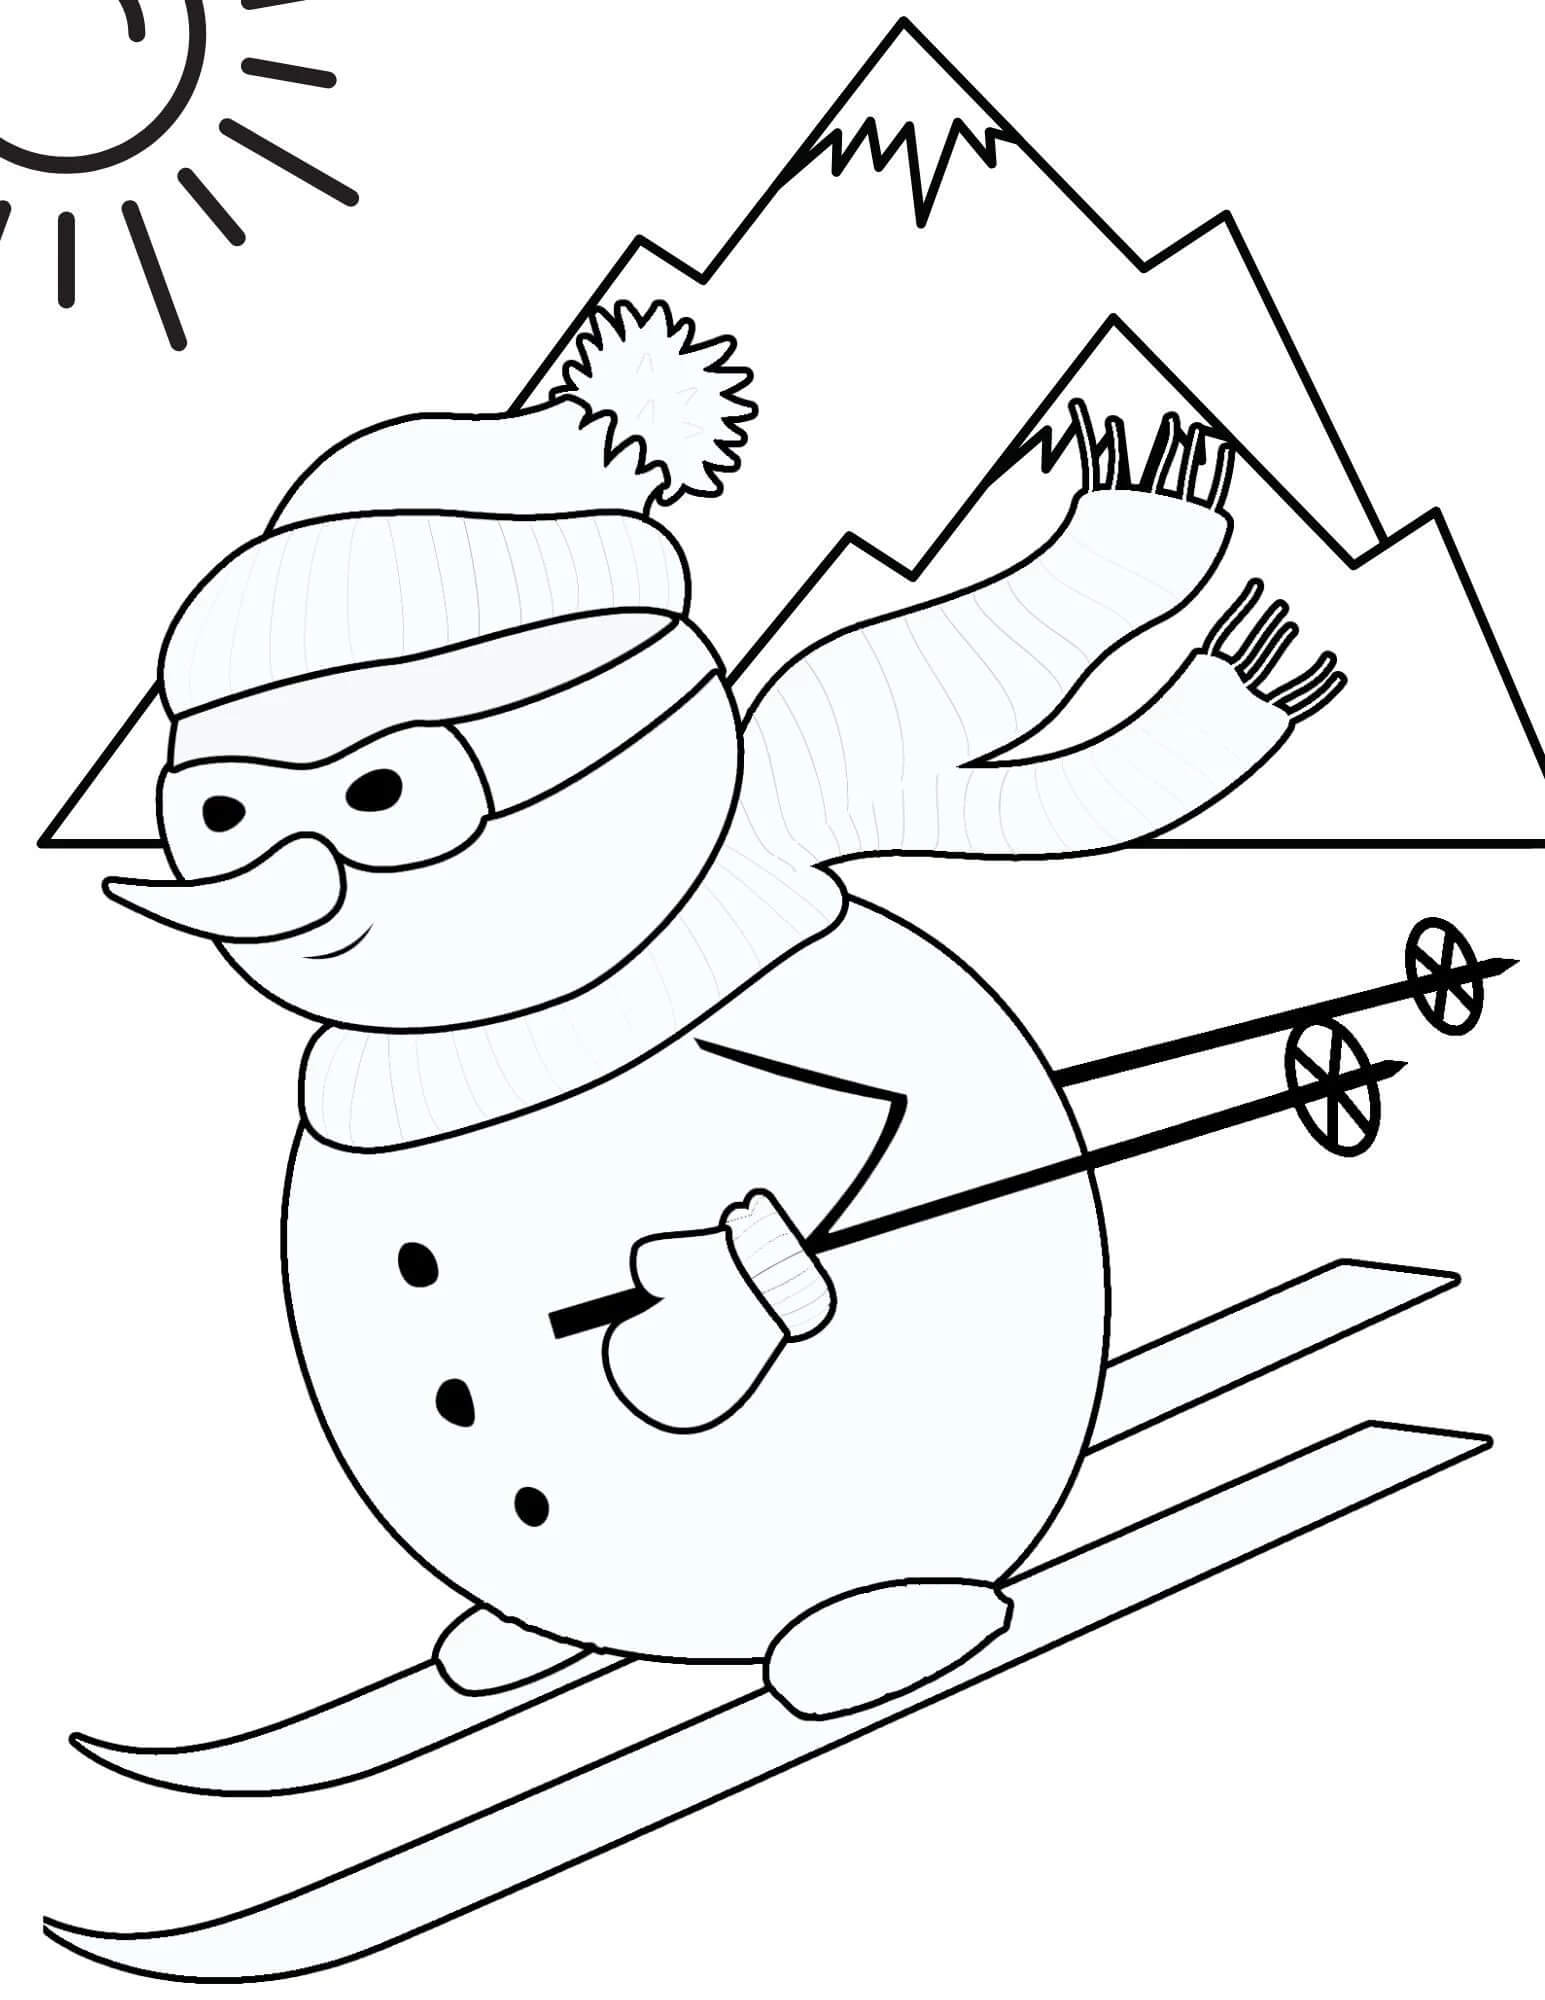 Boneco De Neve Com Snowboard para colorir